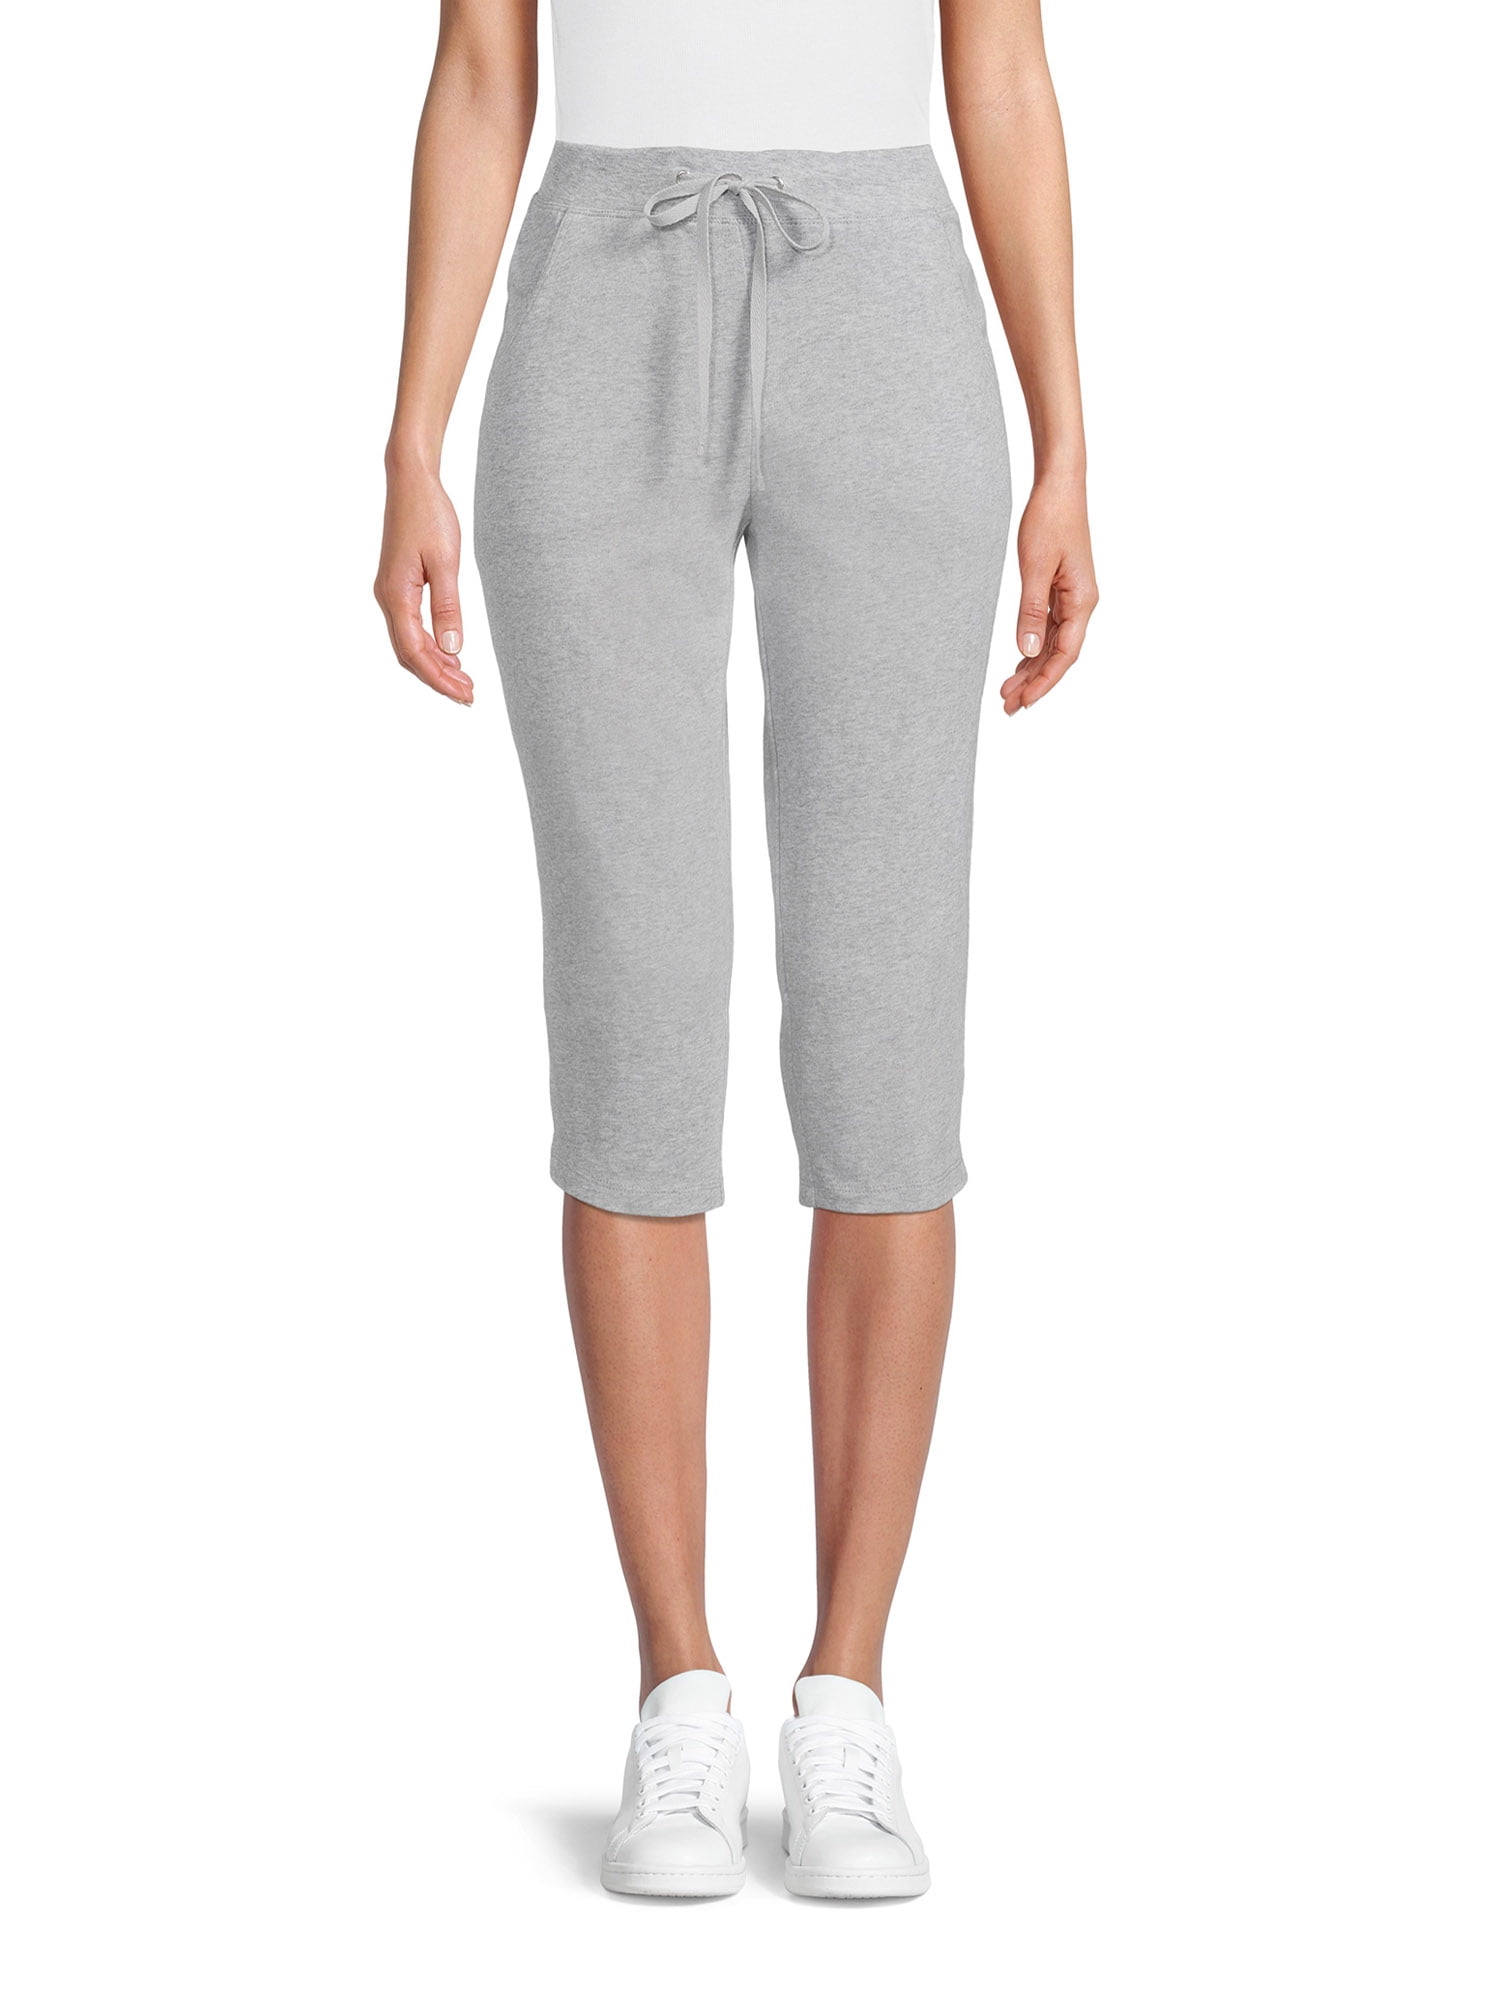 RealSize Women's French Terry Cloth Capri Pants with Pockets, XS-XXXL 